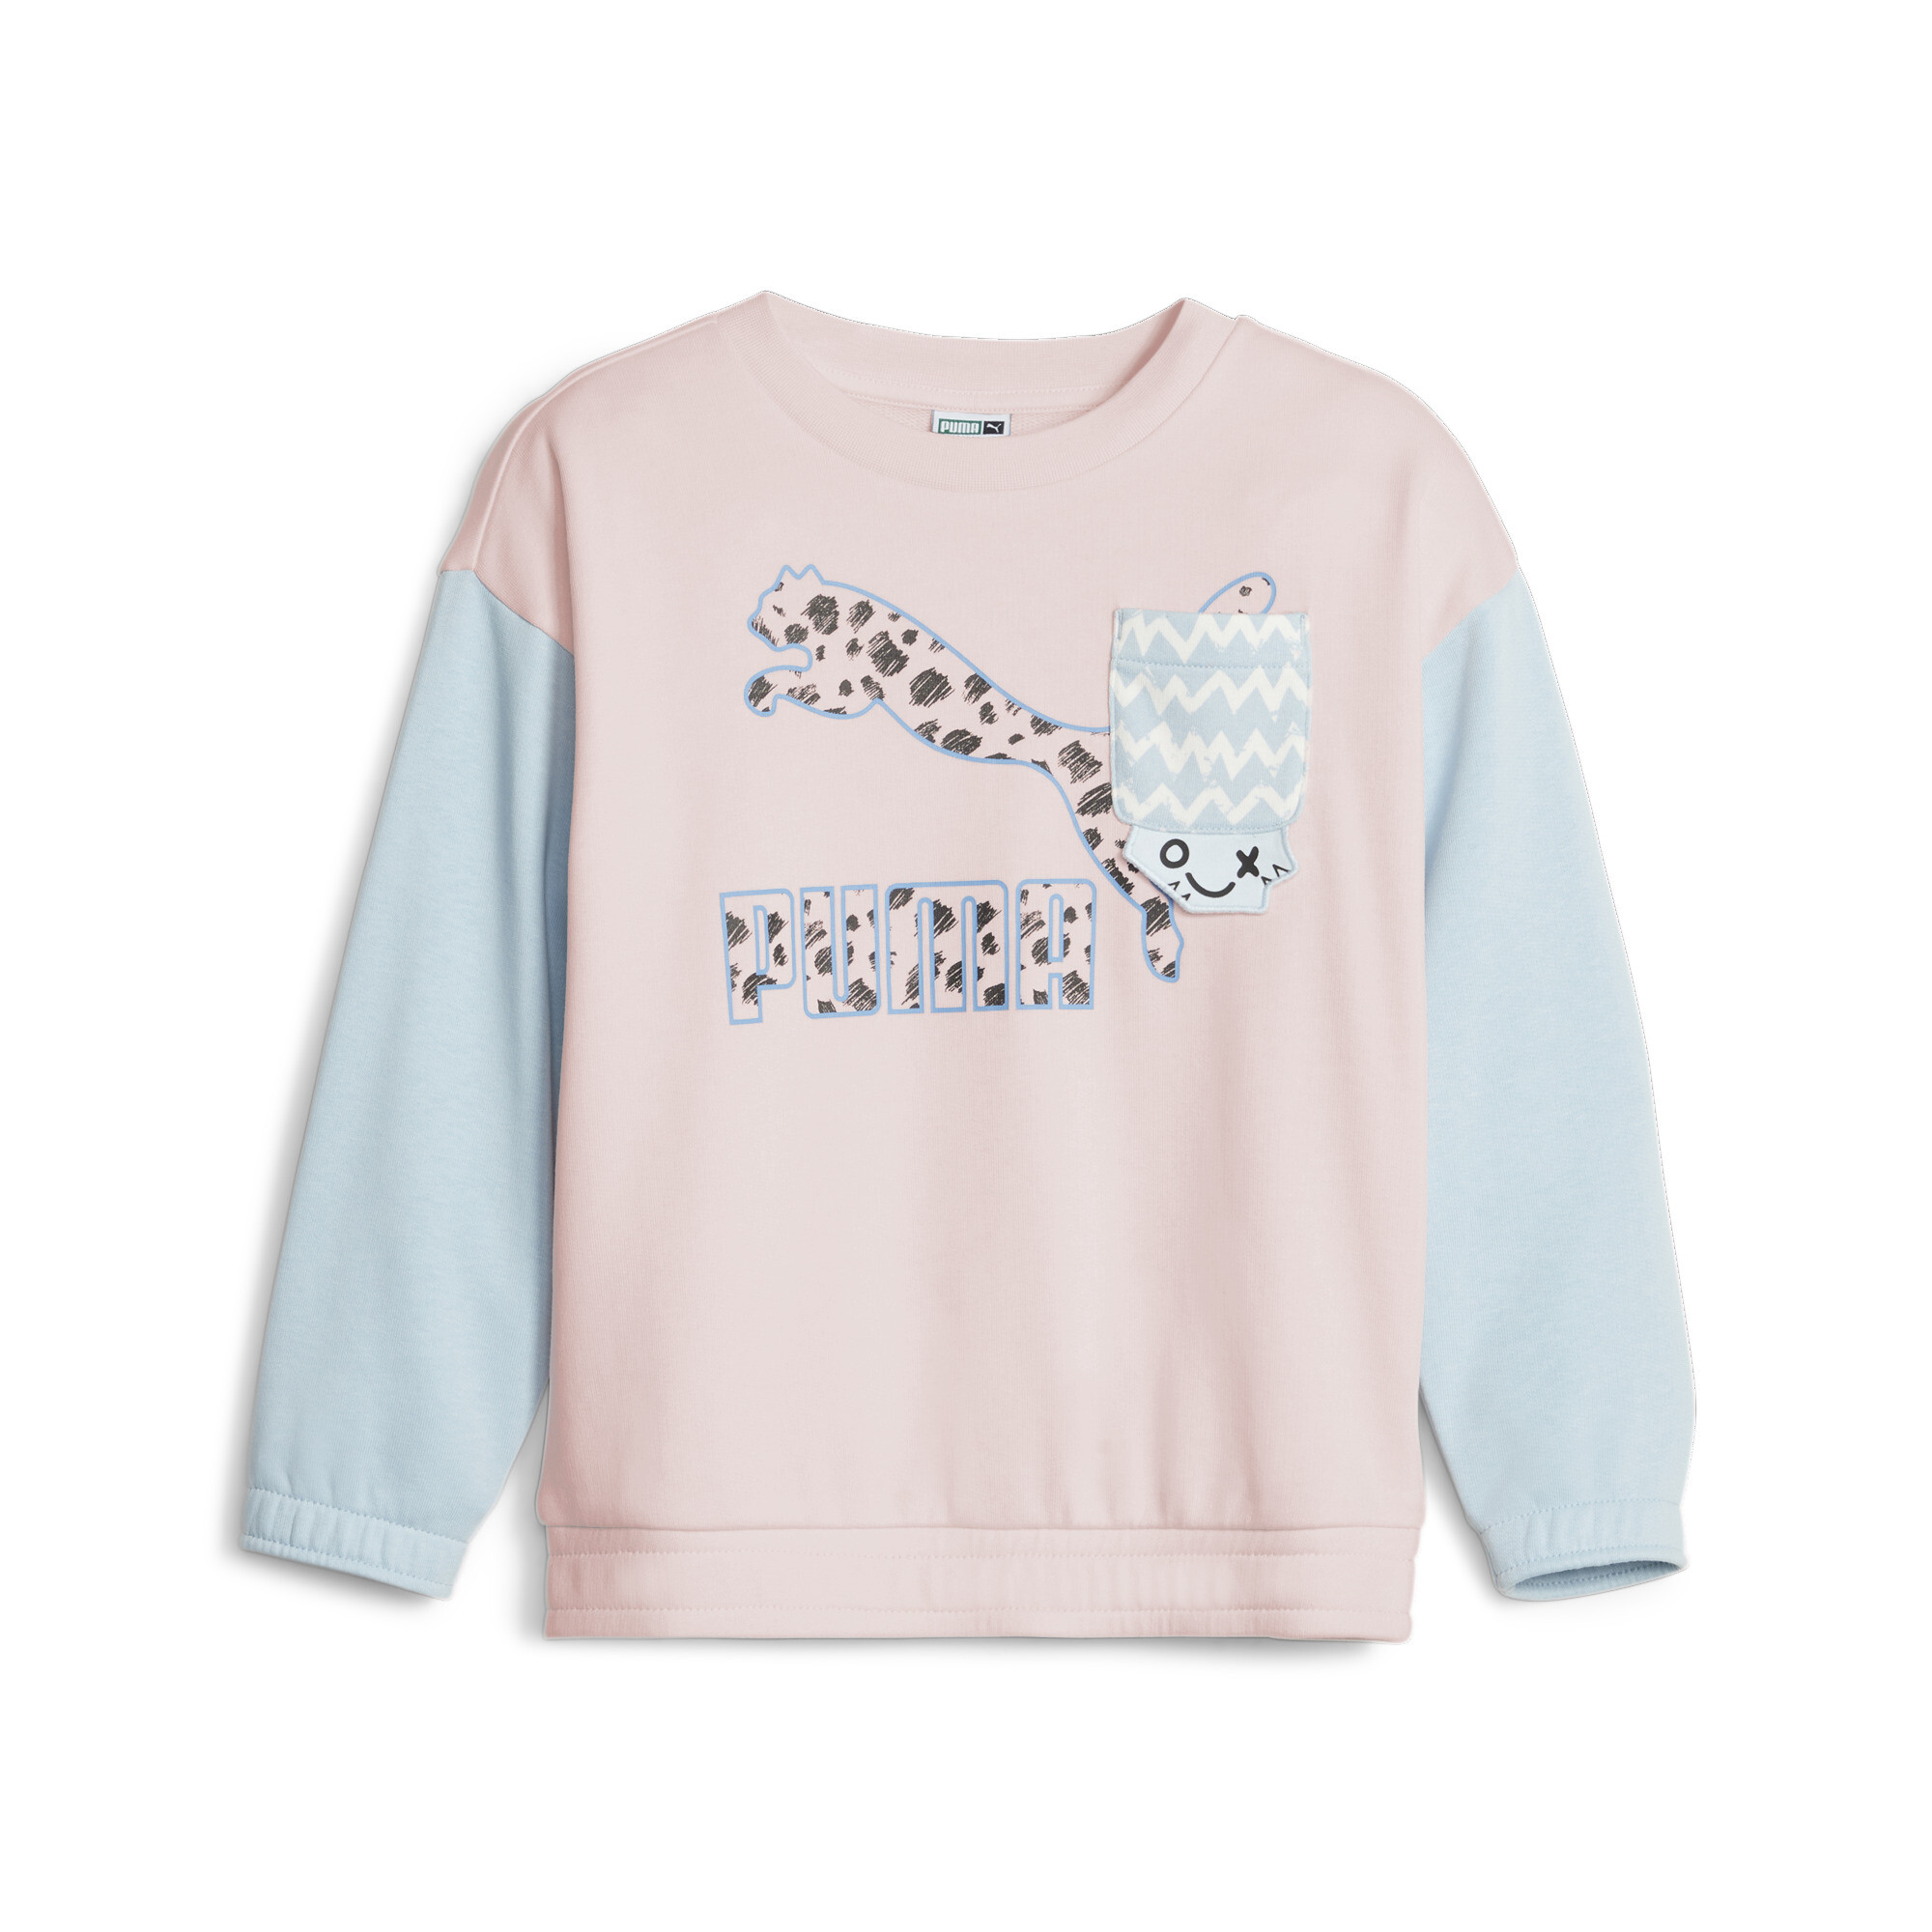 PUMA Classics Mix Match Sweatshirt In Pink, Size 7-8 Youth